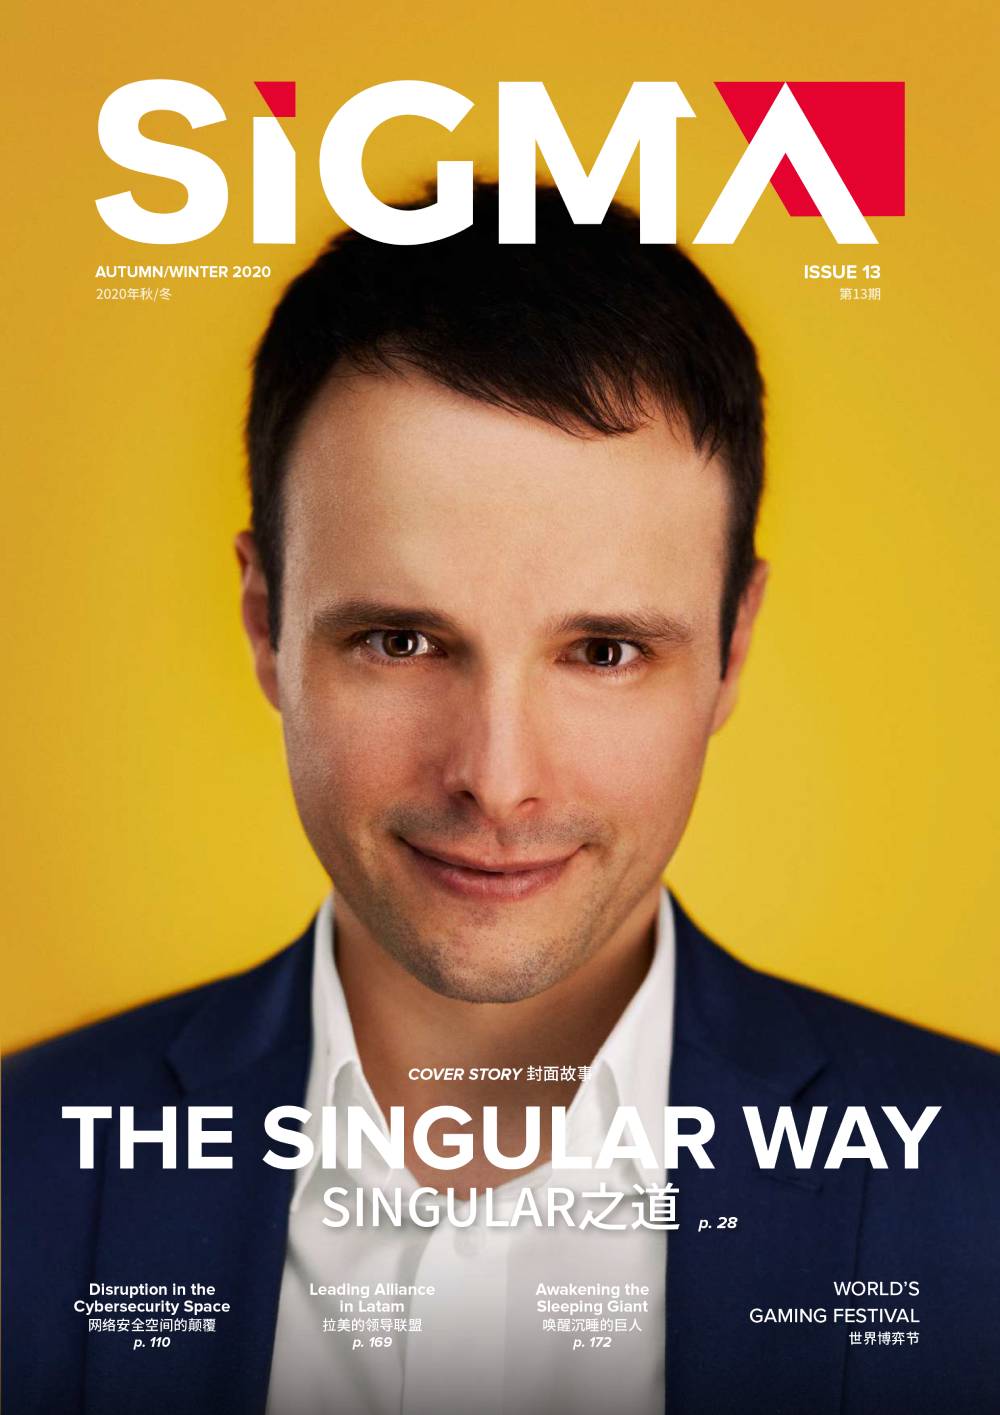 SiGMA Issue 13: The Singular Way